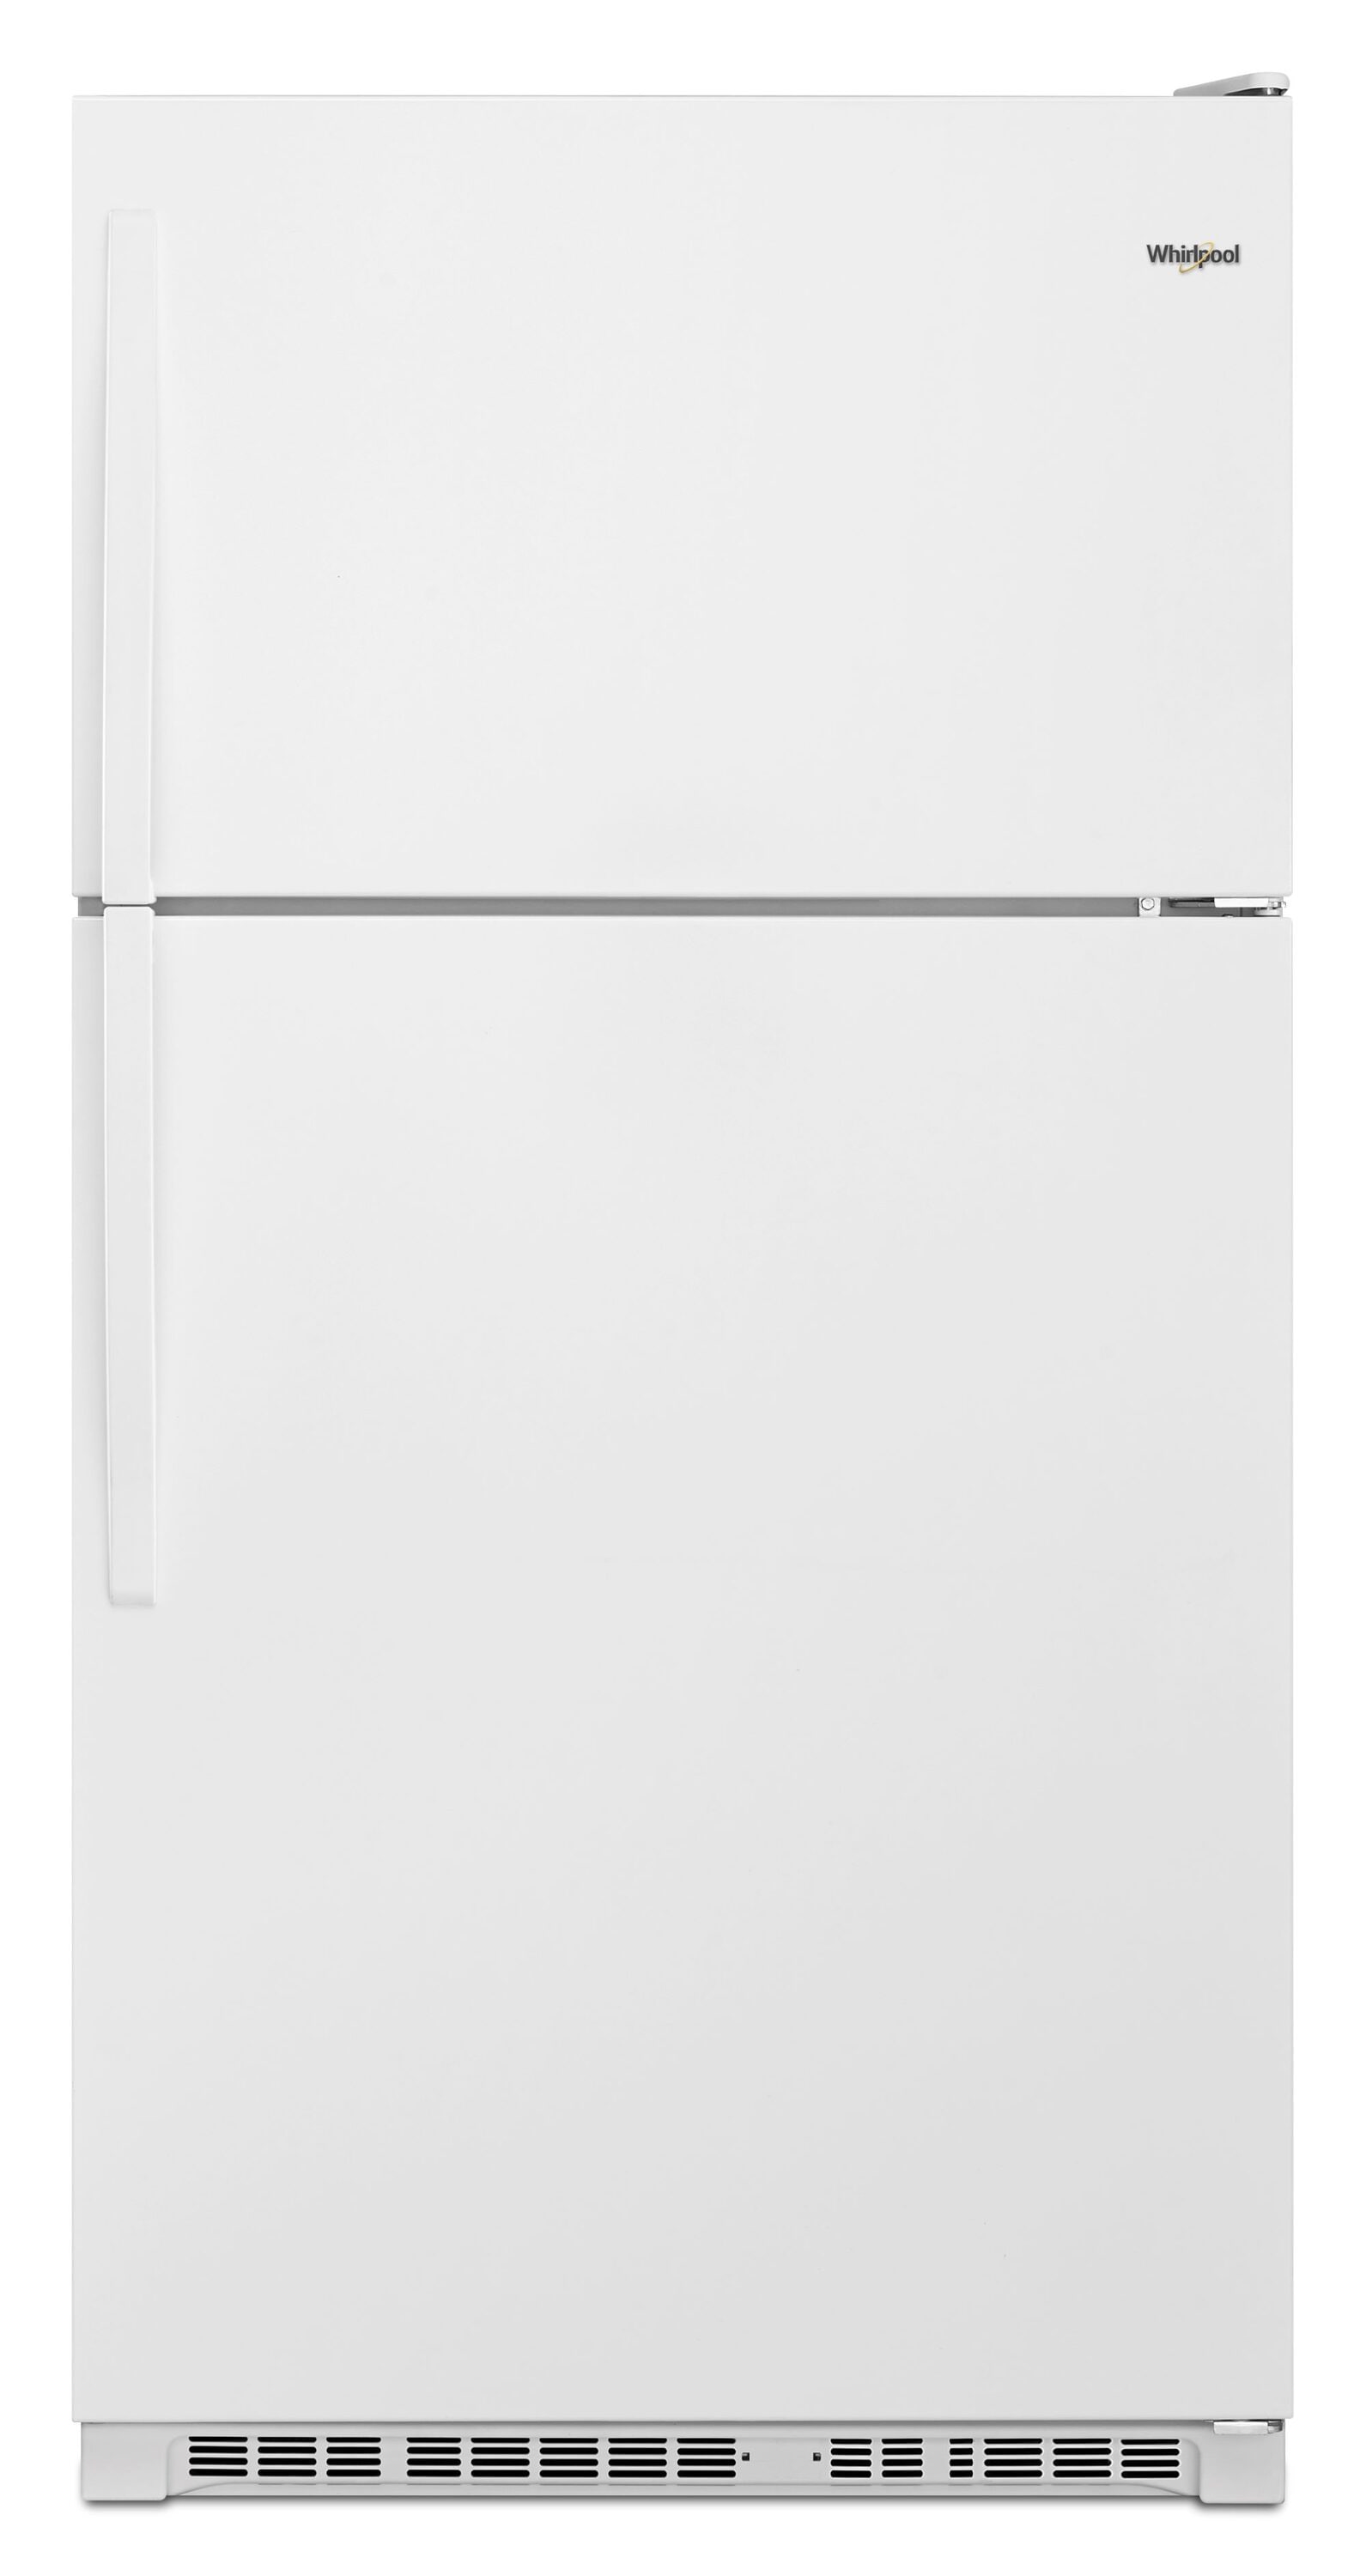 Top-Freezer Refrigerators at